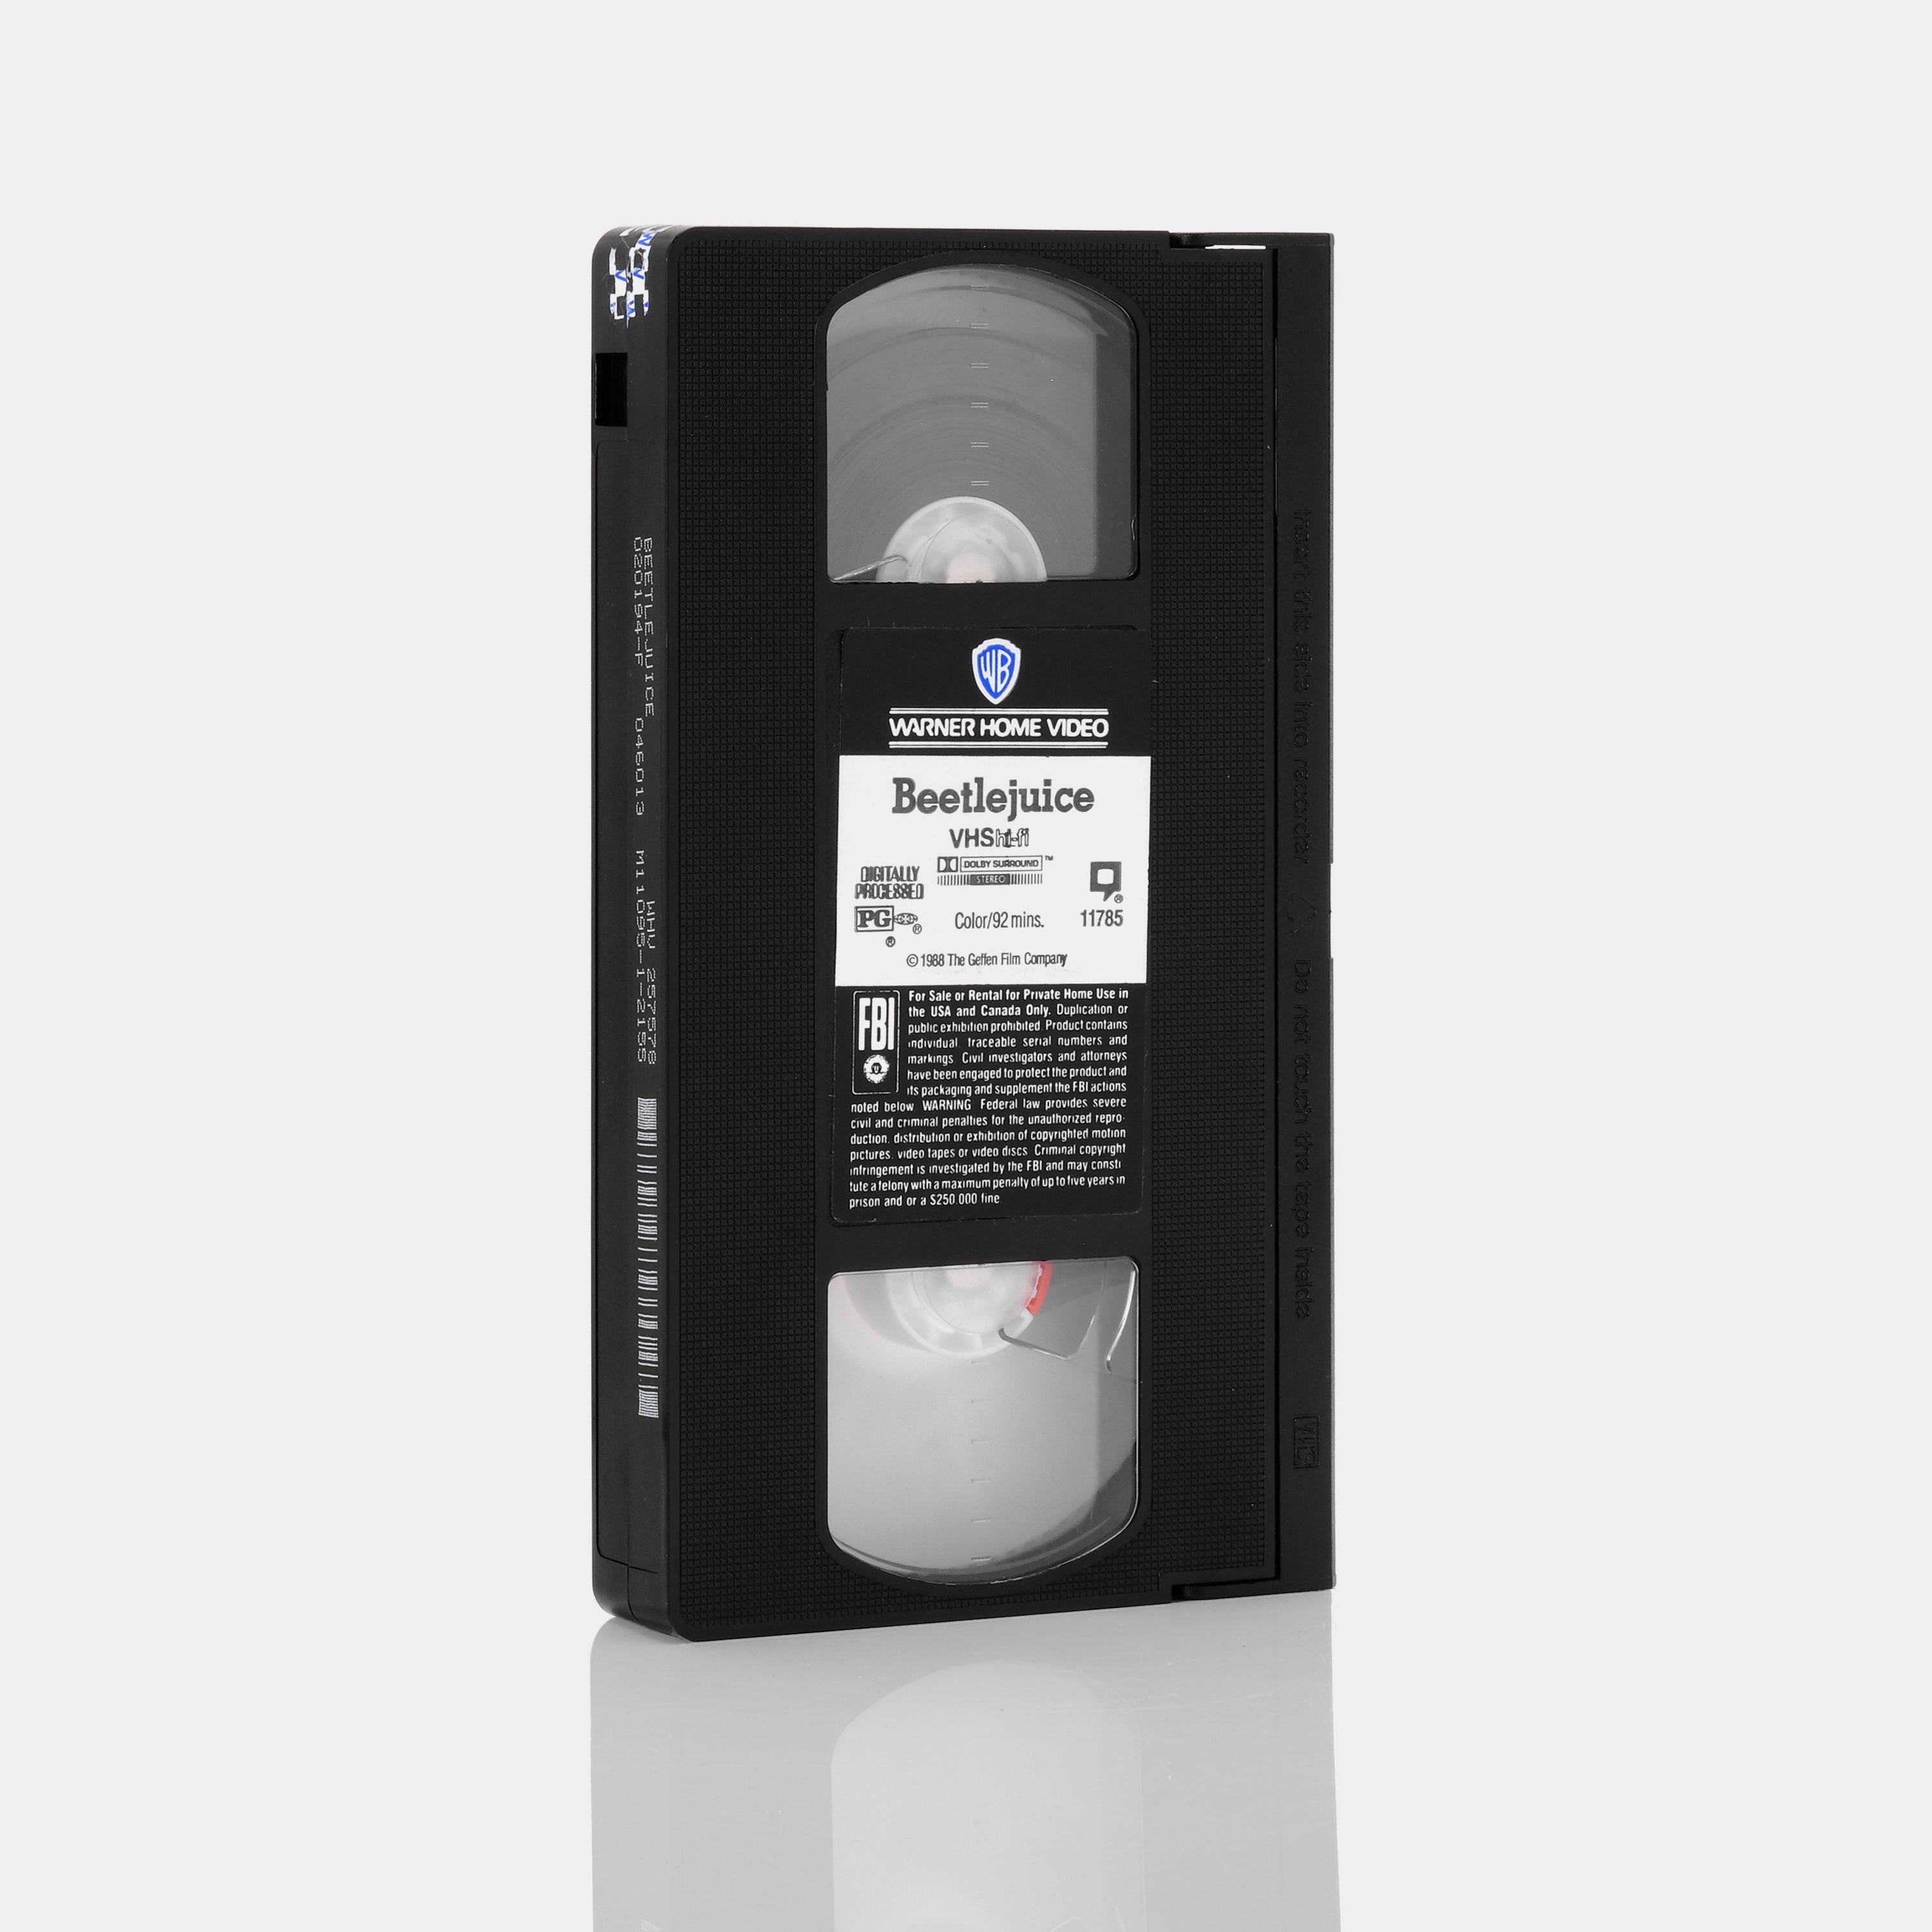 Beetlejuice VHS Tape